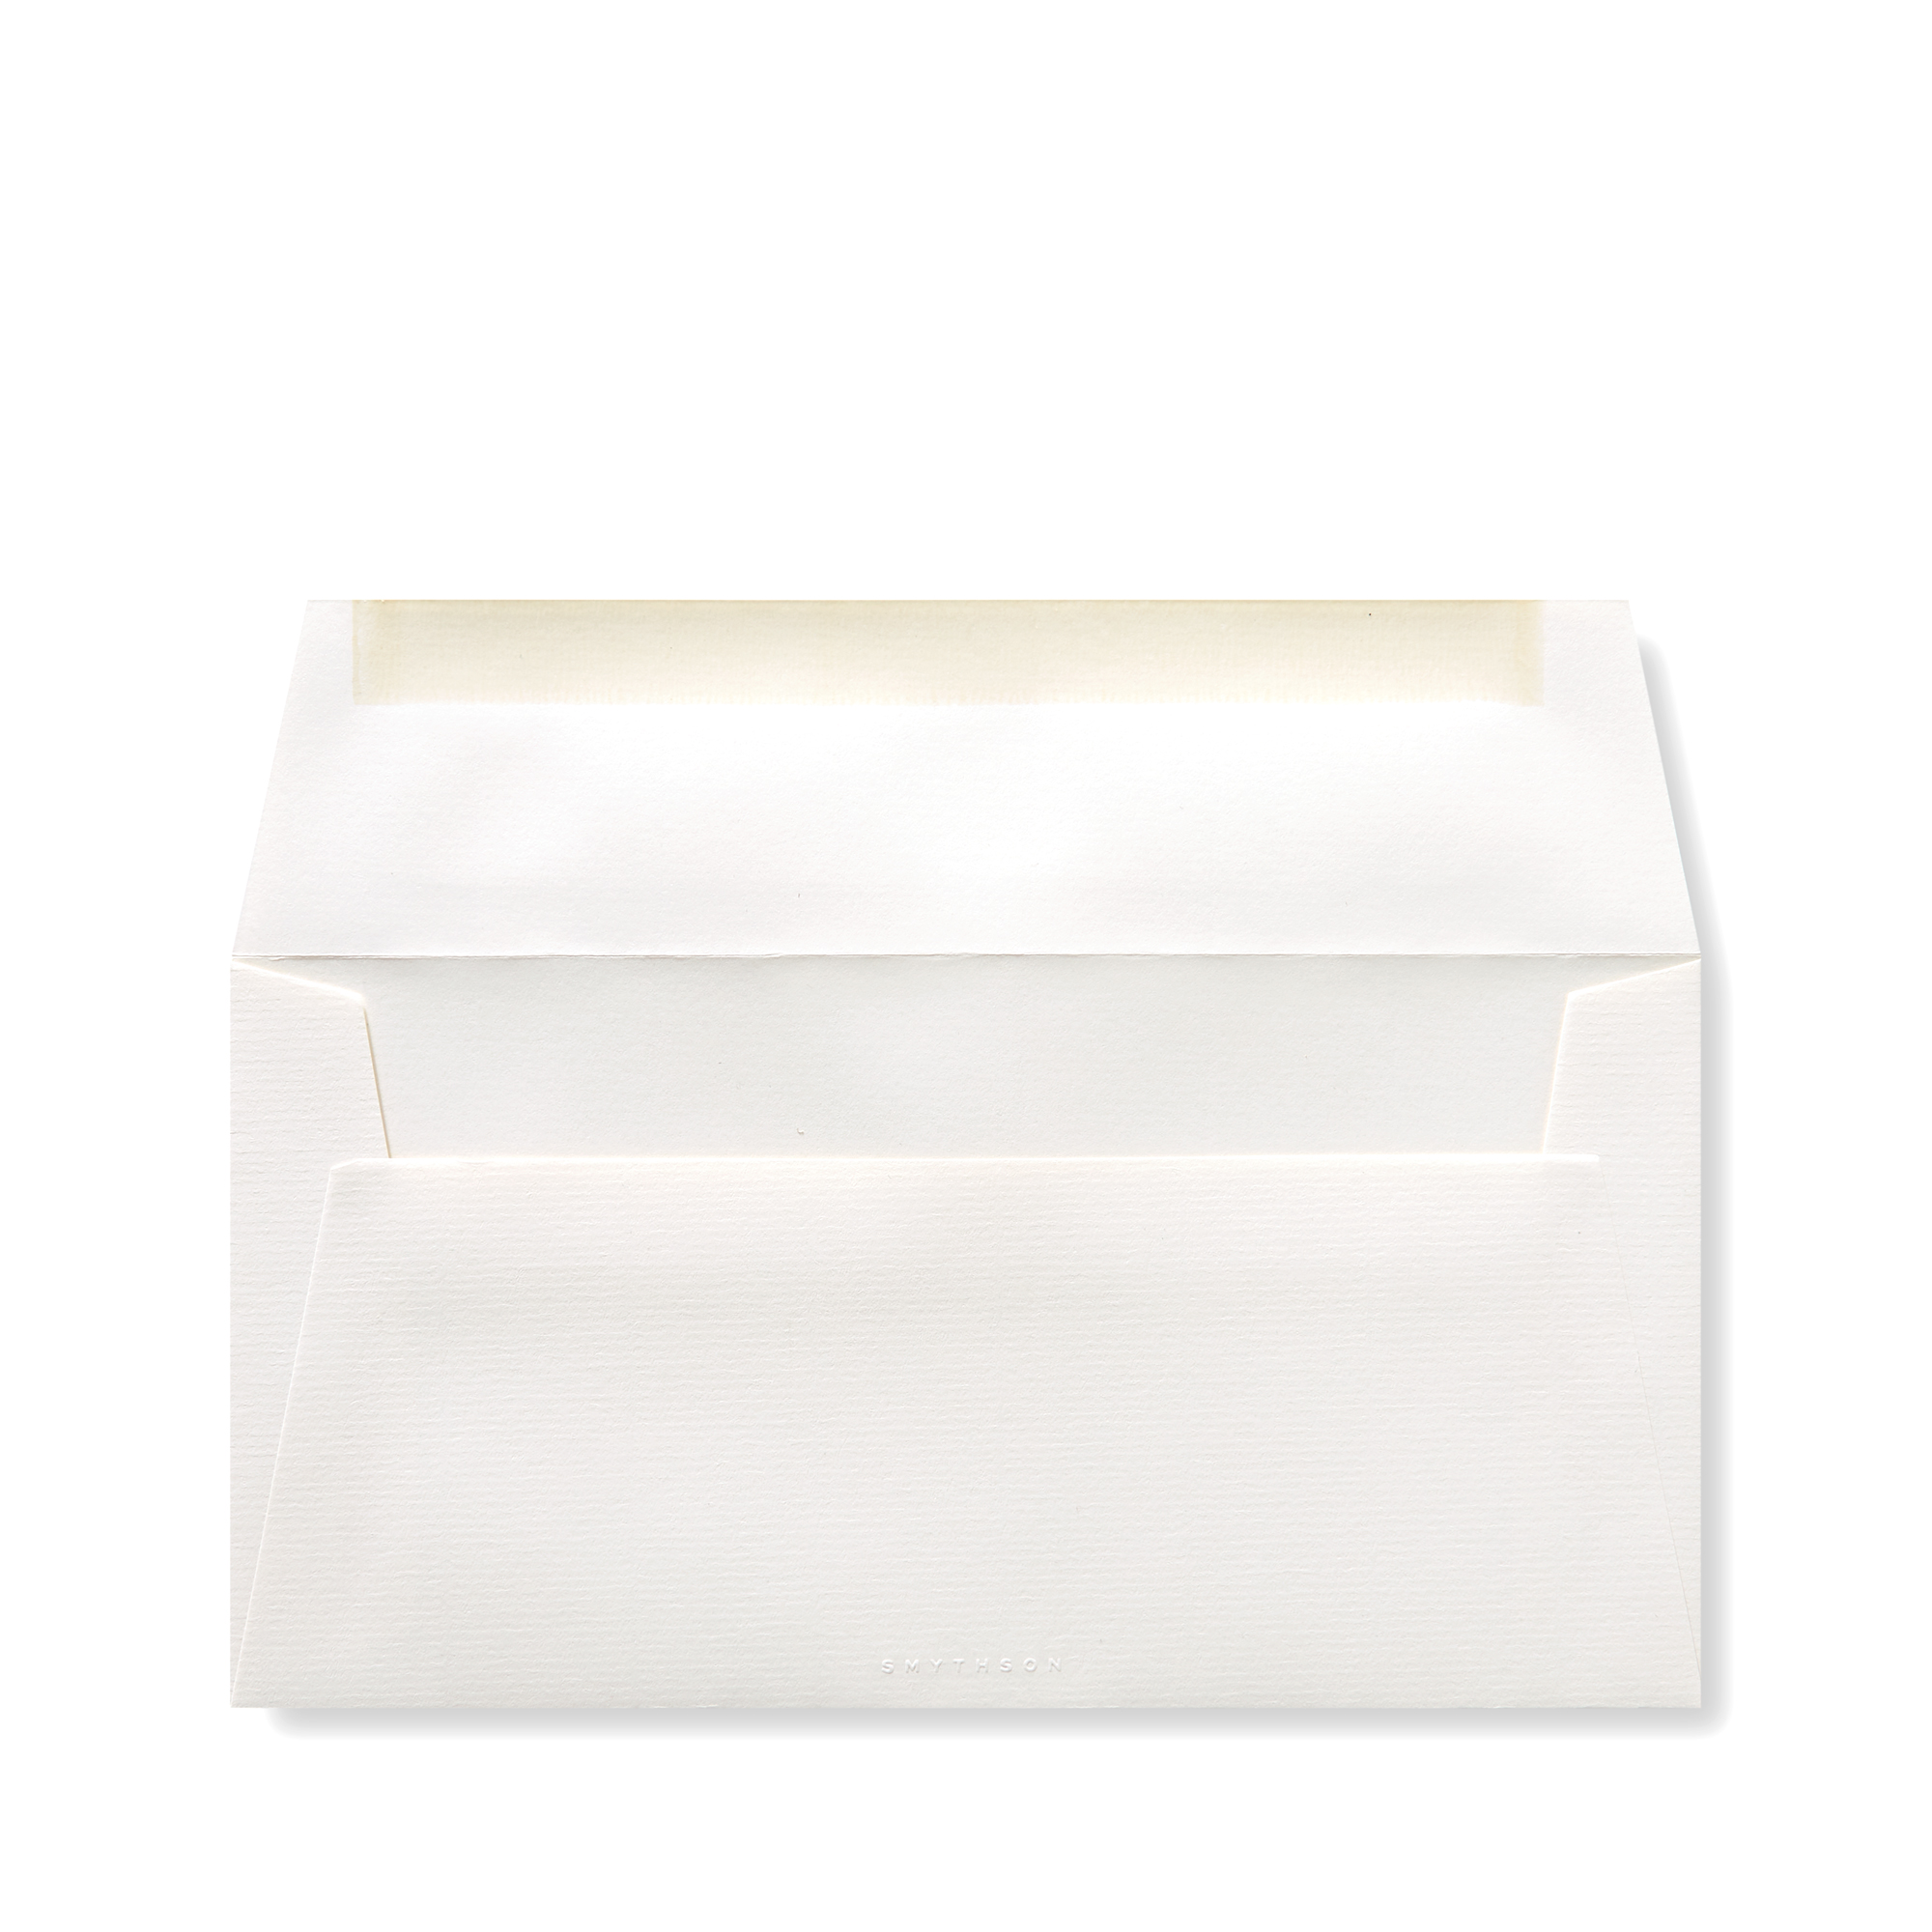 Smythson A4 Envelopes  white laid